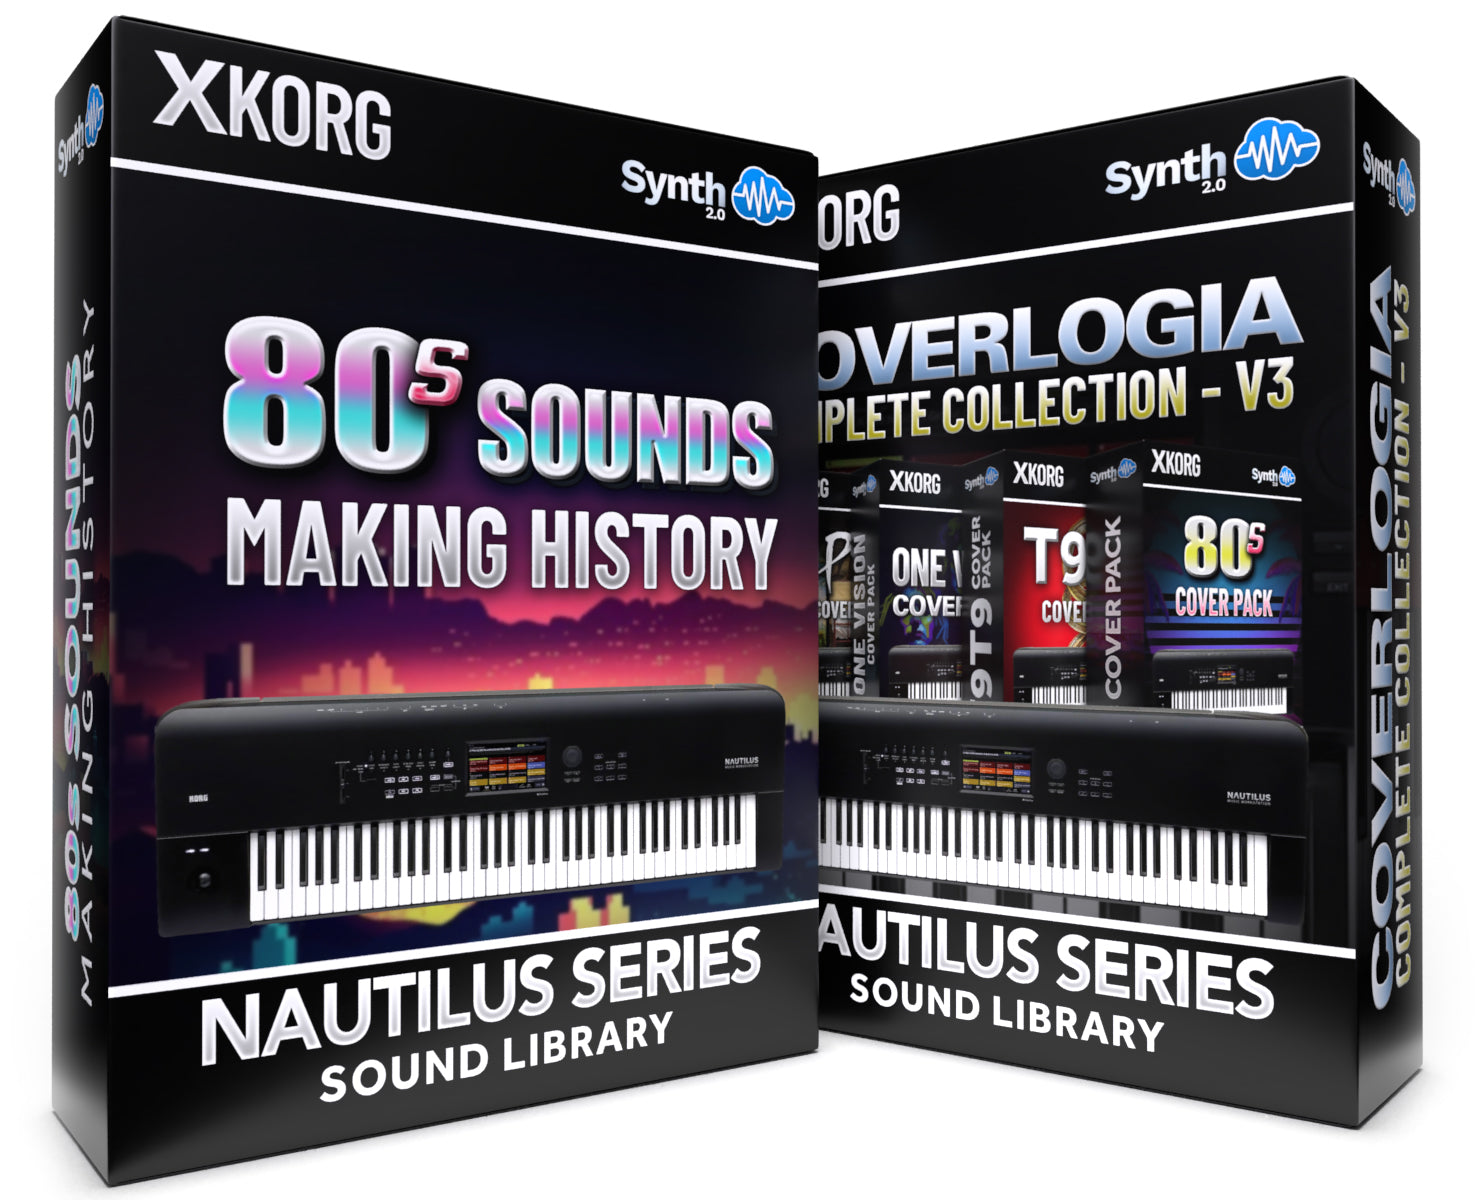 FPL018 - ( Bundle ) - 80s Sounds - Making History + Coverlogia V3 - Korg Nautilus Series